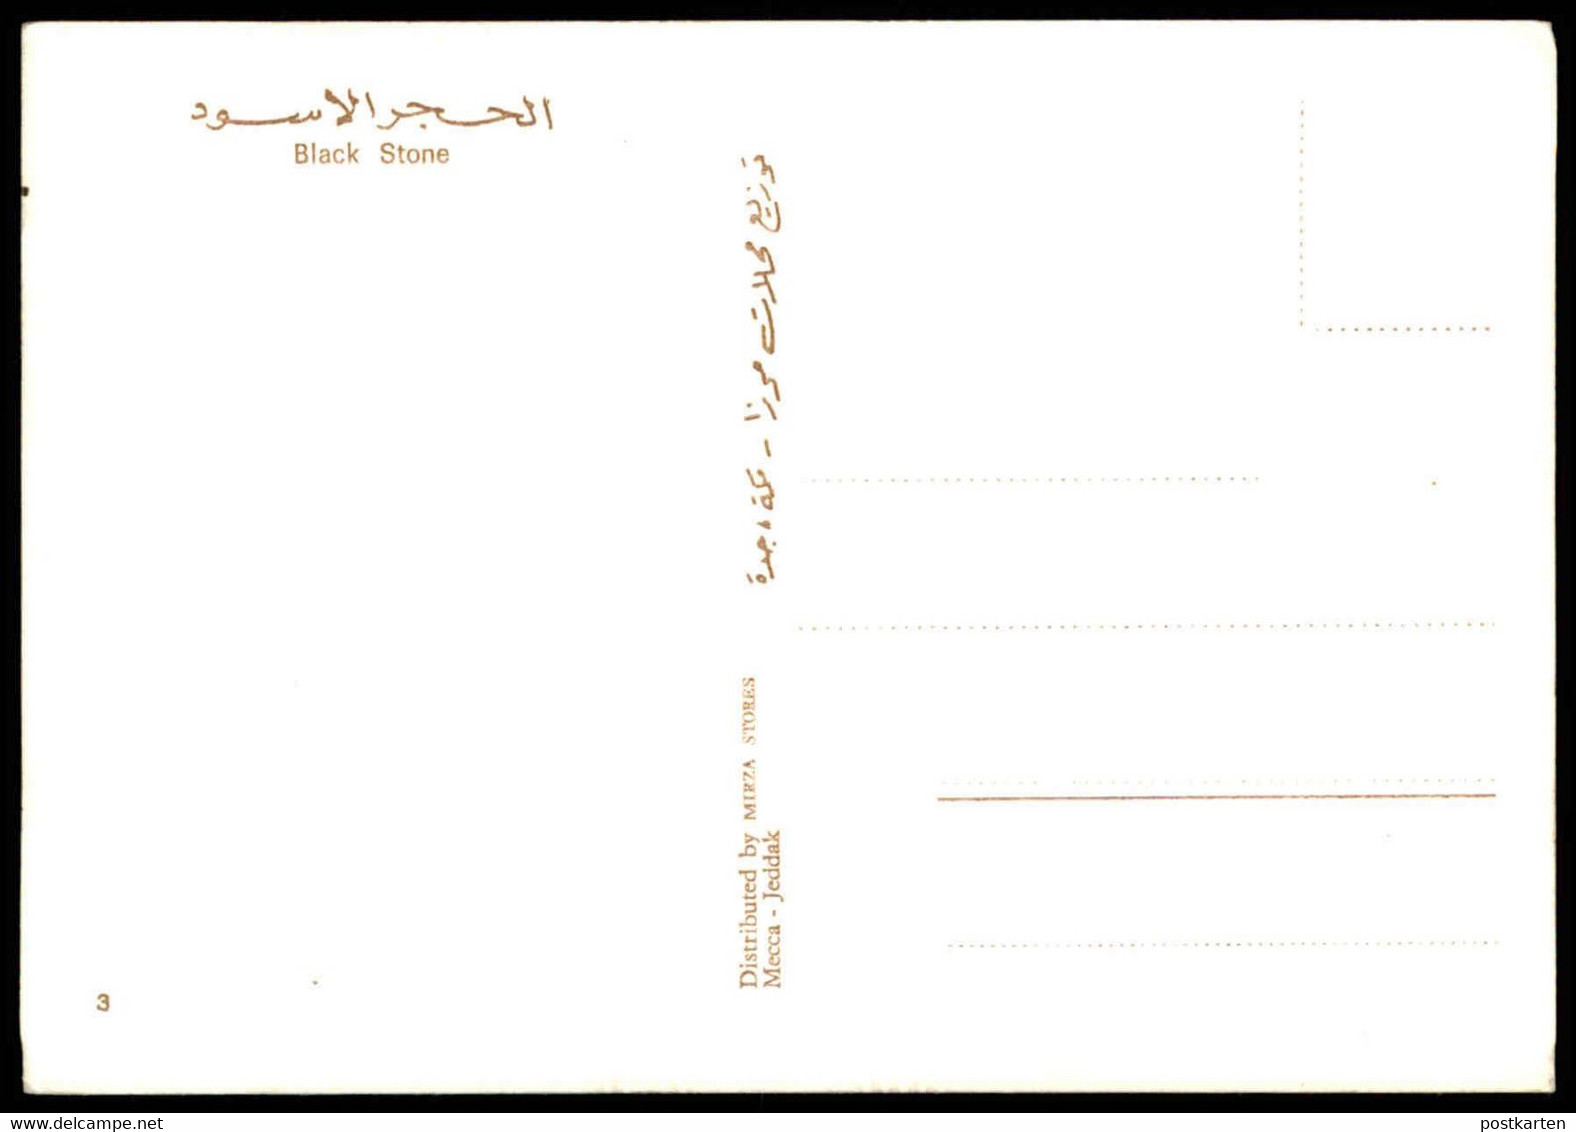 ÄLTERE KARTE MECCA HADDSCH BLACK STONE KAABA Mekka Saudi Arabien Saudi Arabia Pilger Cpa Ansichtskarte Postcard AK - Arabie Saoudite